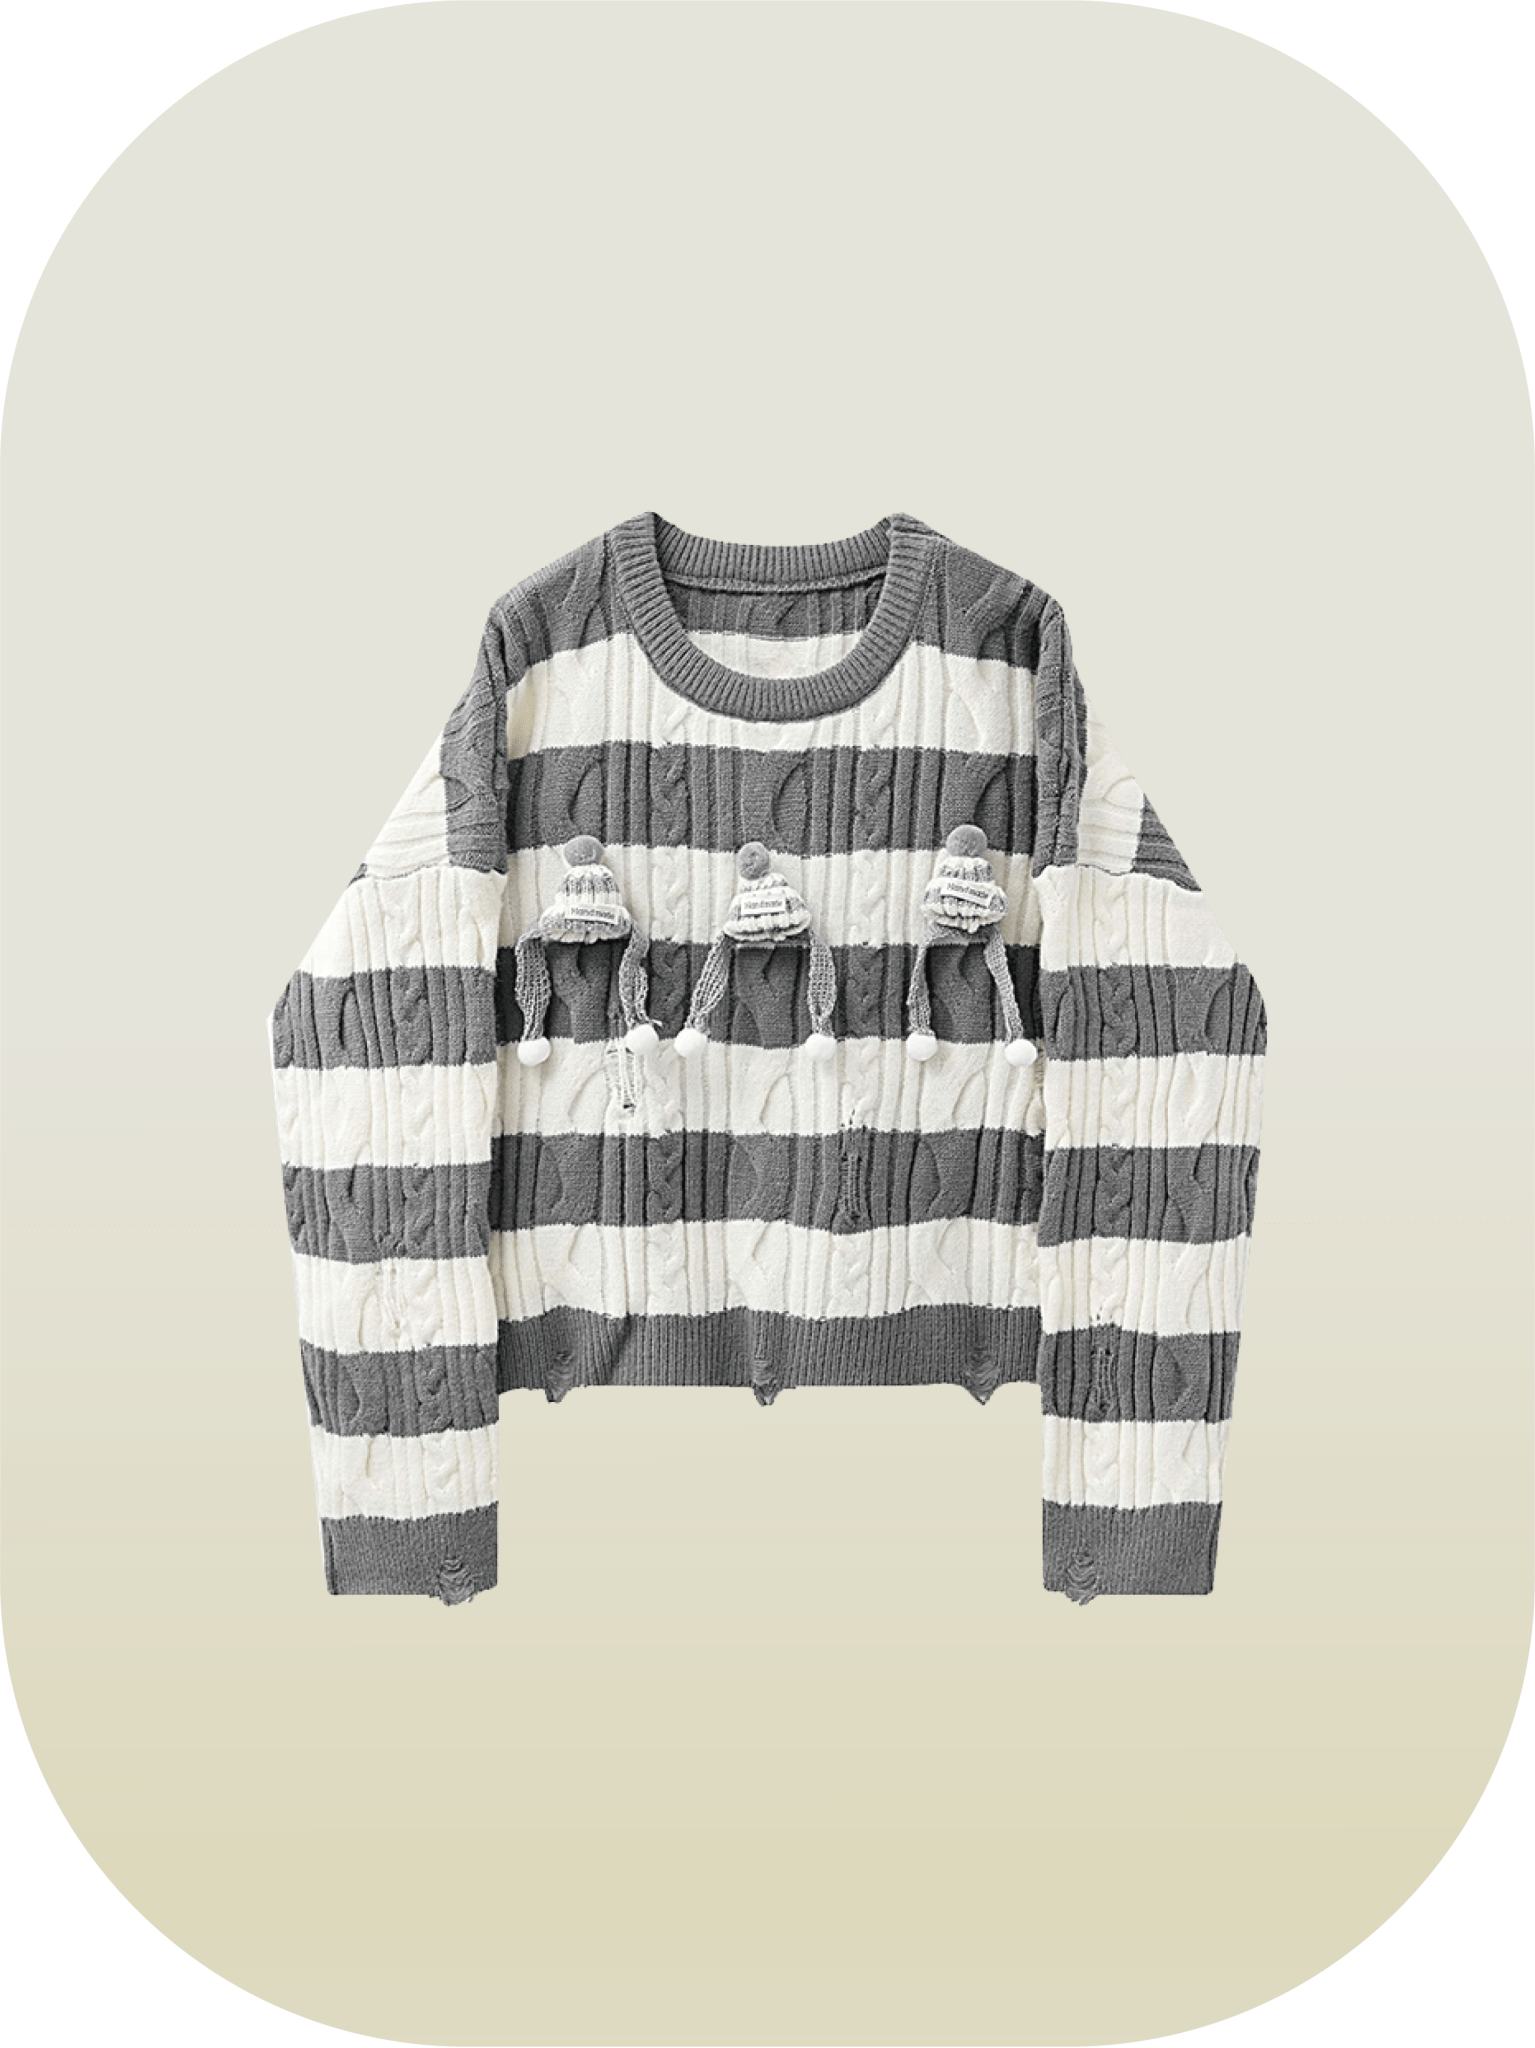 Hat Decorate Stripe Sweater - LOVE POMME POMME